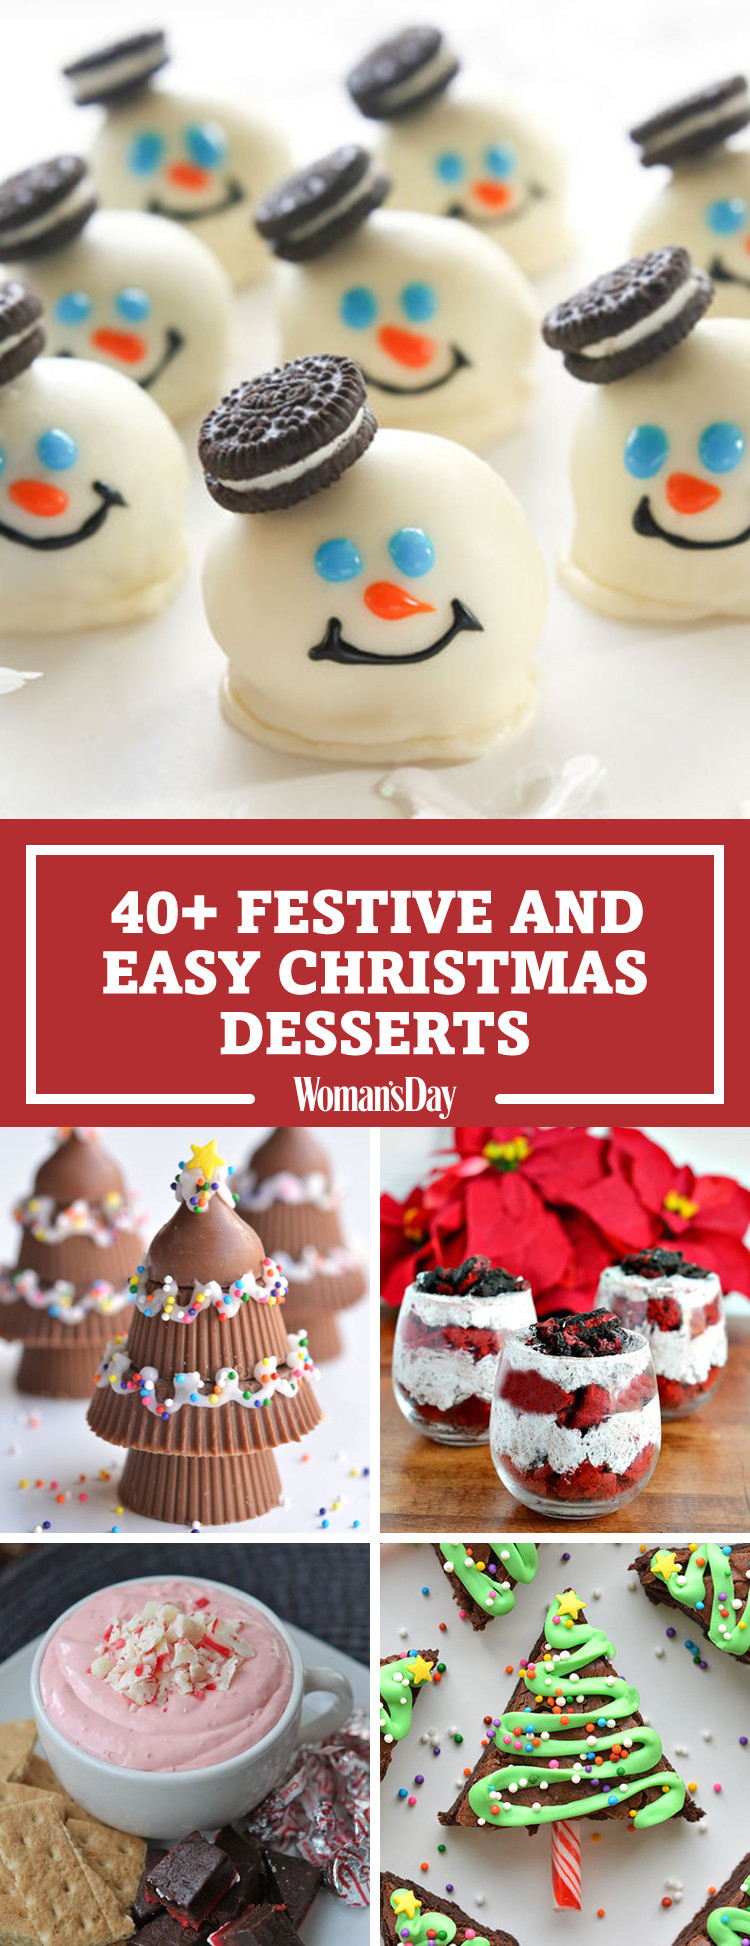 Easy Christmas Desserts Recipes
 57 Easy Christmas Dessert Recipes Best Ideas for Fun